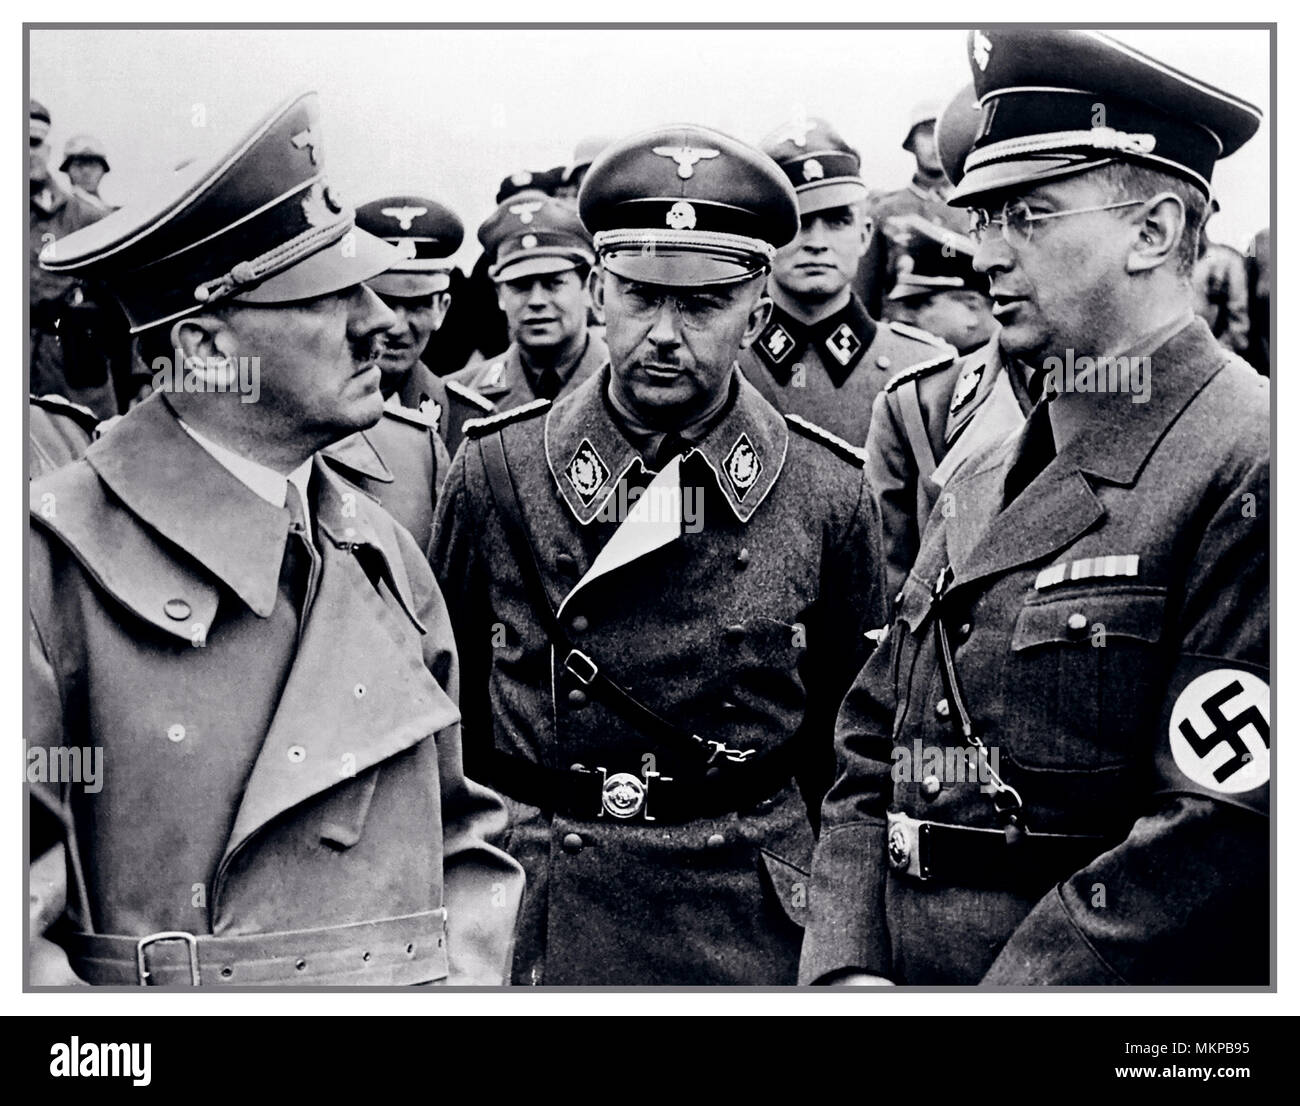 HITLER, HIMMLER, HENLEIN, Vintage WW2 image B&W d'Adolf Hitler, chef du Parti nazi (Nationalsozialistische Deutsche Arbeiterpartei; NSDAP), chancelier de l'Allemagne de 1933 à 1945 et Führer (leader) de l'Allemagne nazie de 1934 à 1945 Heinrich Hler Reichsführer (escadron de protection) de Schutzstahmer Waffen SS) et un membre du parti nazi (NSDAP) d'allemand et Konrad Henlein Reichsstatthalter et gauleiter du Reichsgau Sudetenland portant un brassard swastika. Tout cela en uniforme, avec des officiers SS regroupés derrière Banque D'Images